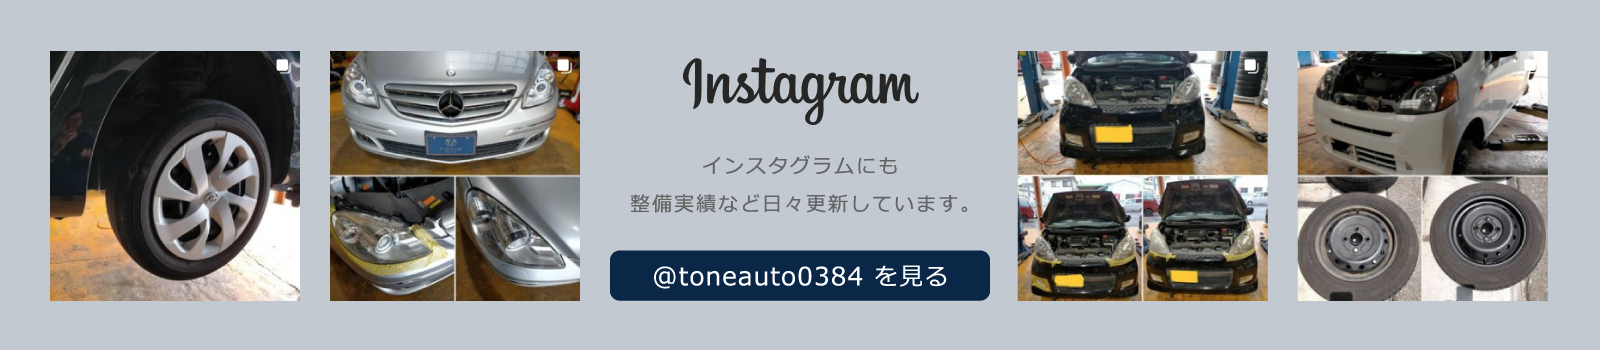 T-oneautoのinstagram